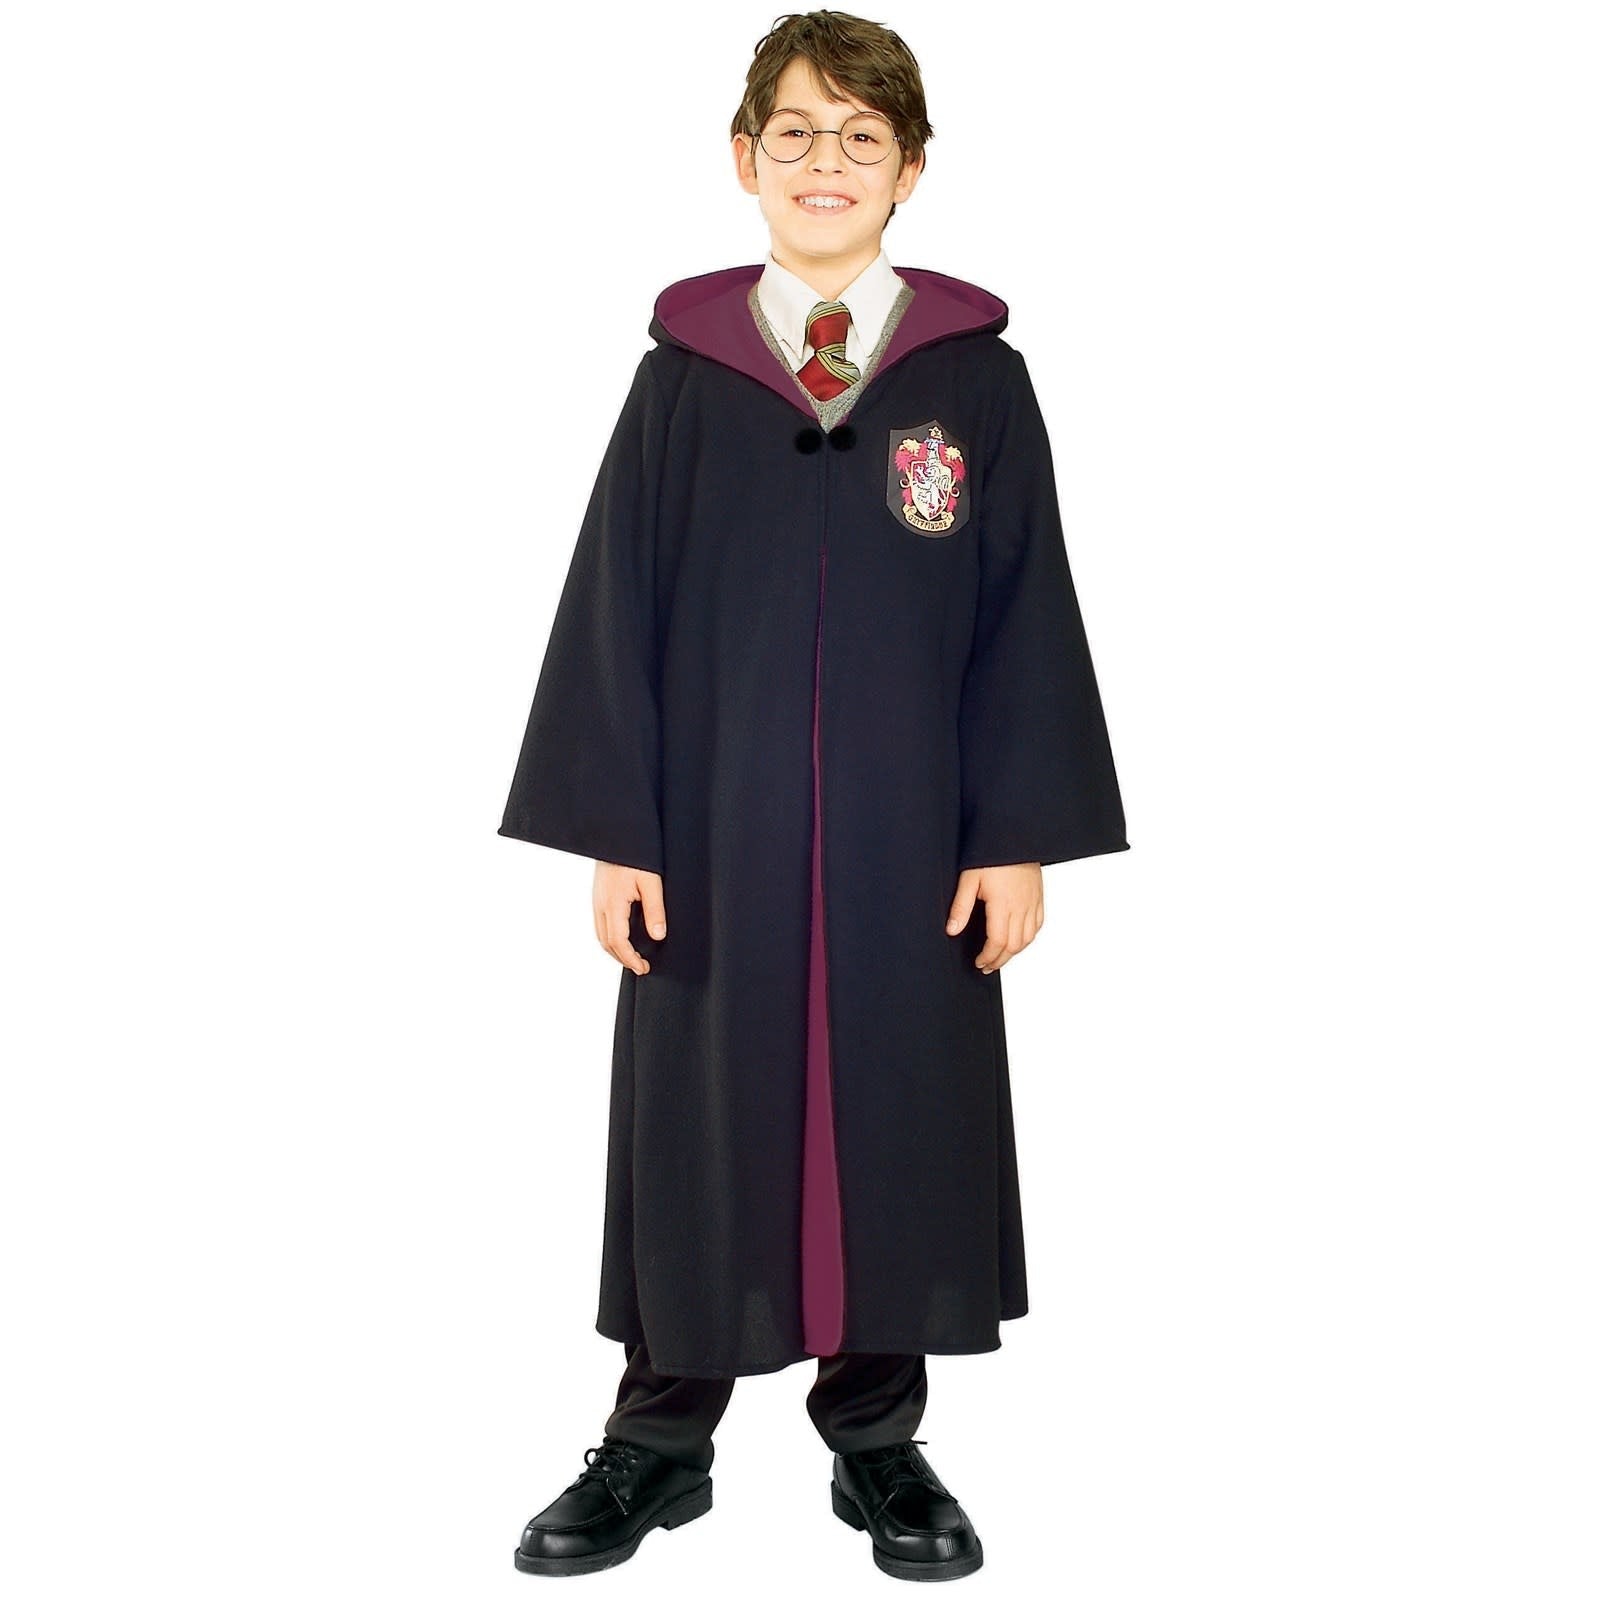 Costume Enfant Deluxe - Robe Harry Potter Party Shop